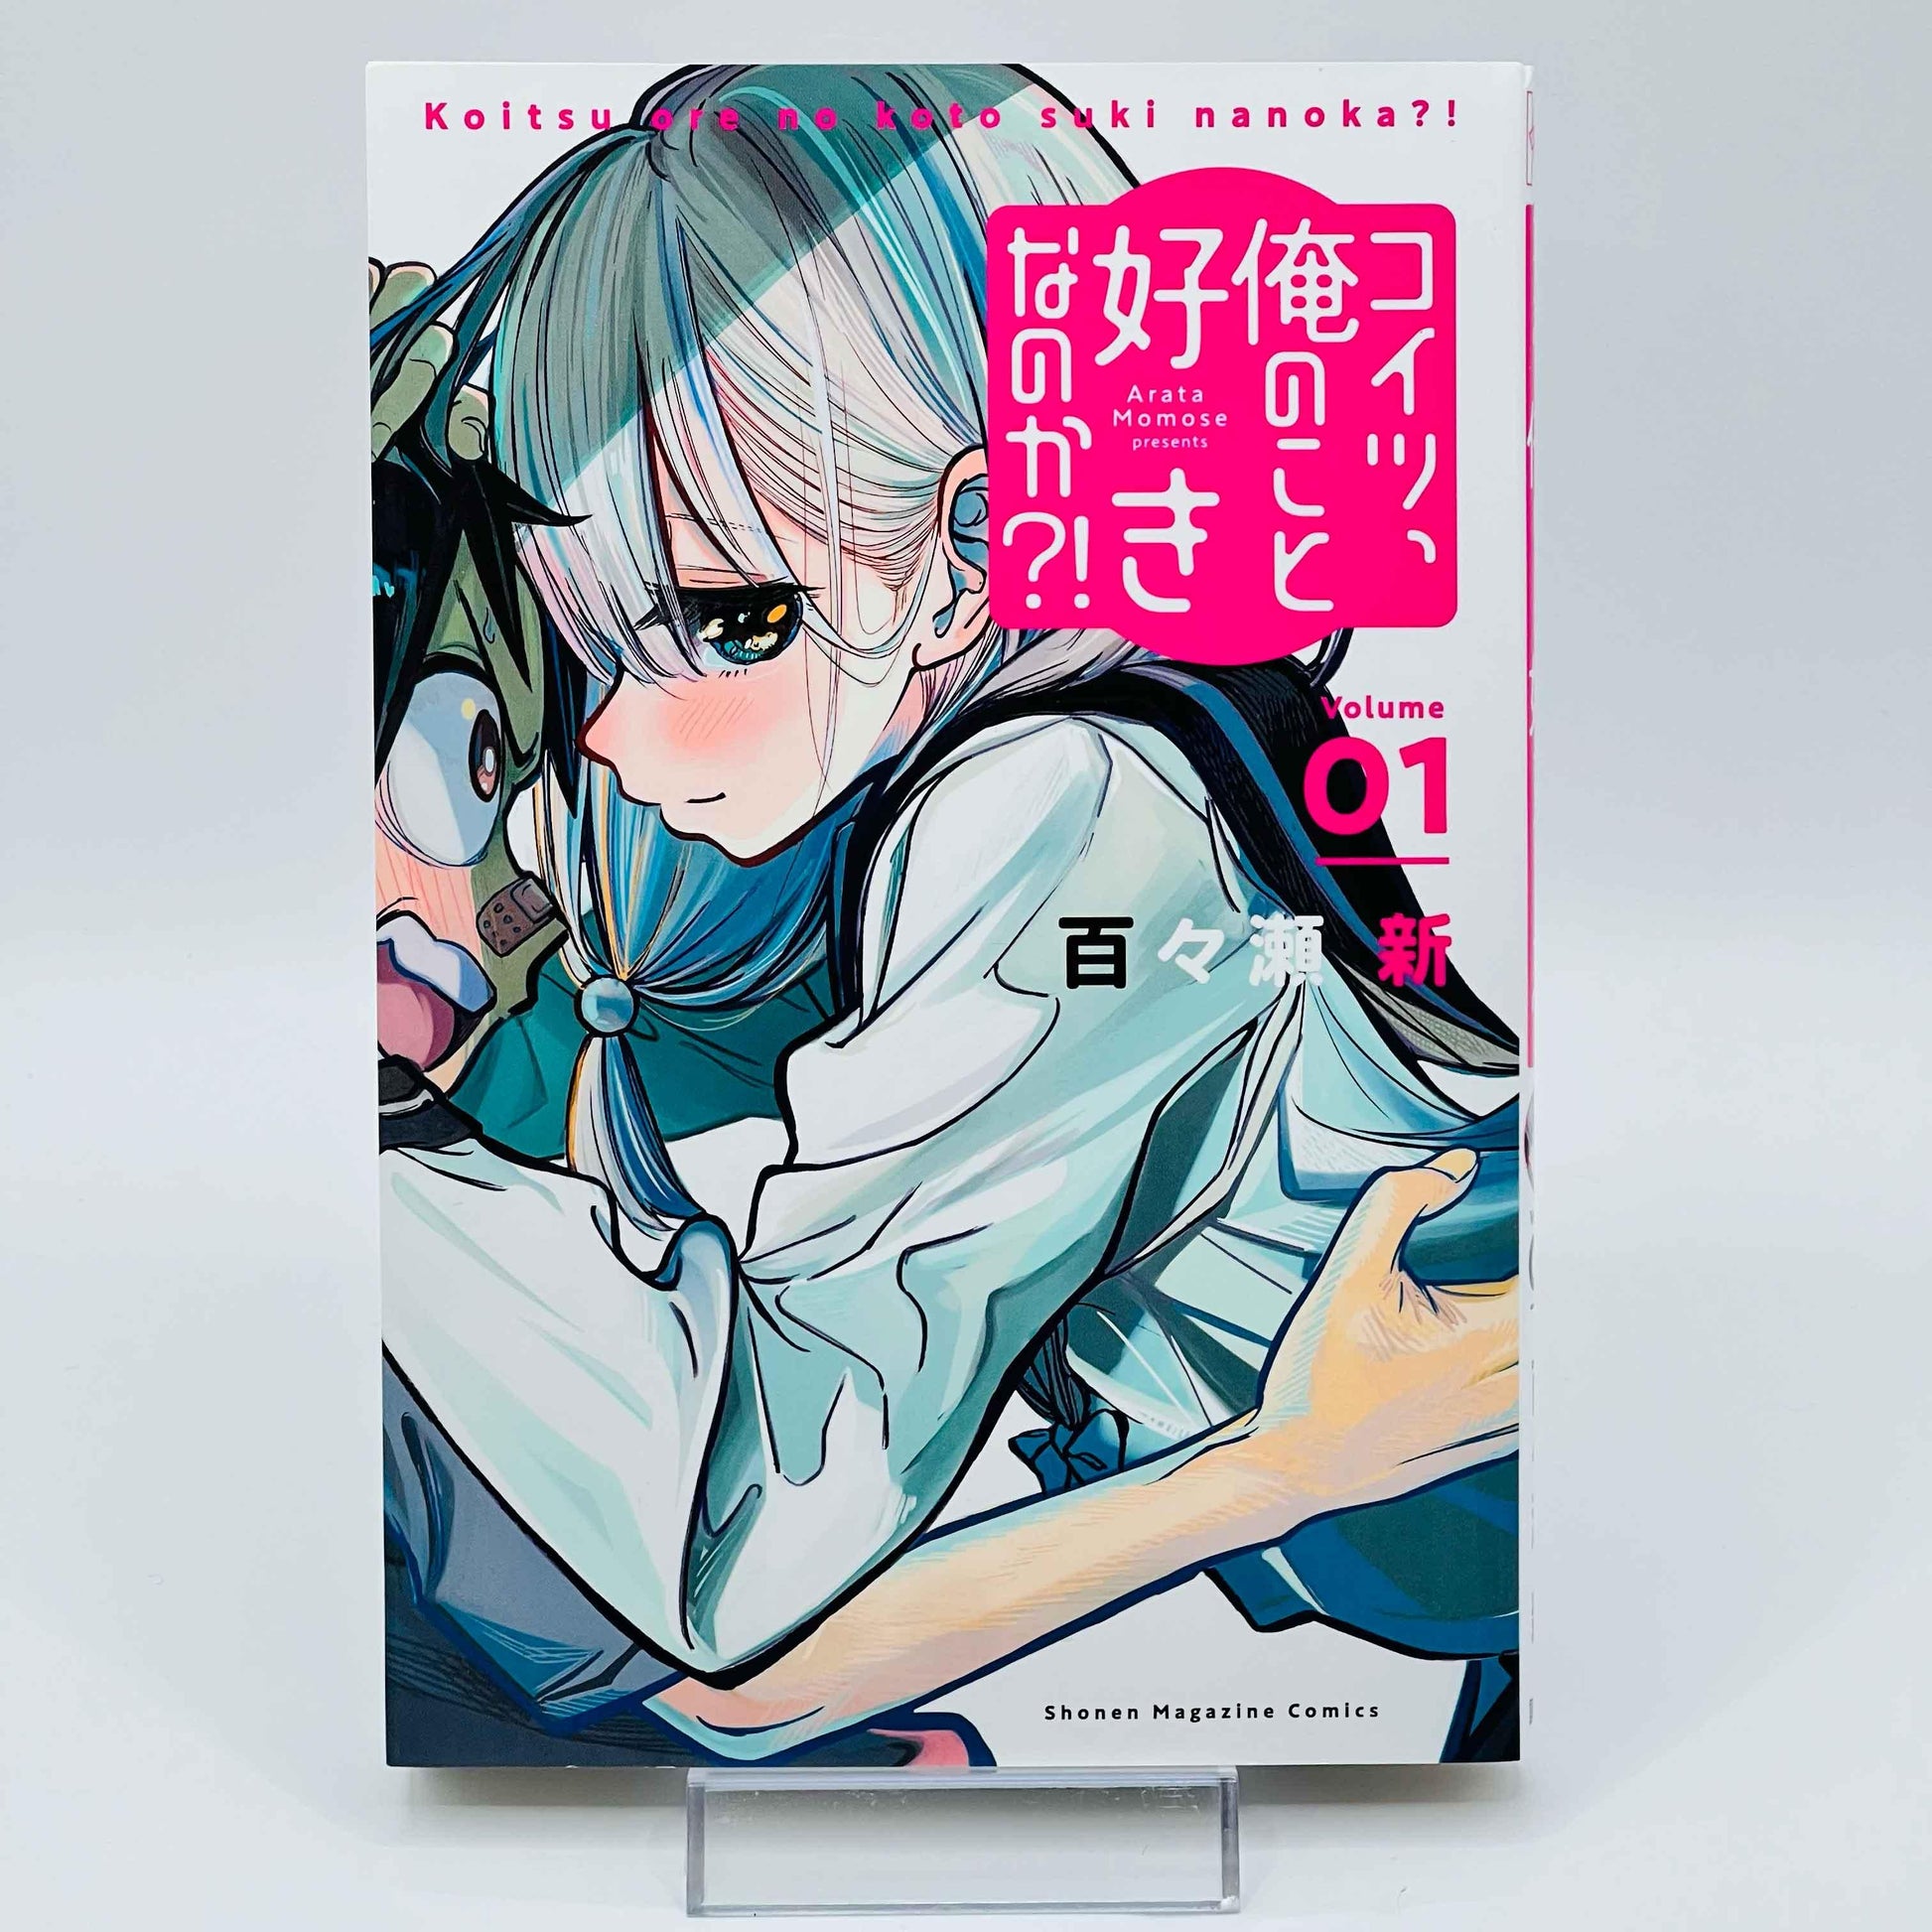 Koitsu Ore no Koto Suki nano ka - Volume 01 - 1stPrint.net - 1st First Print Edition Manga Store - M-KONKS-01-001